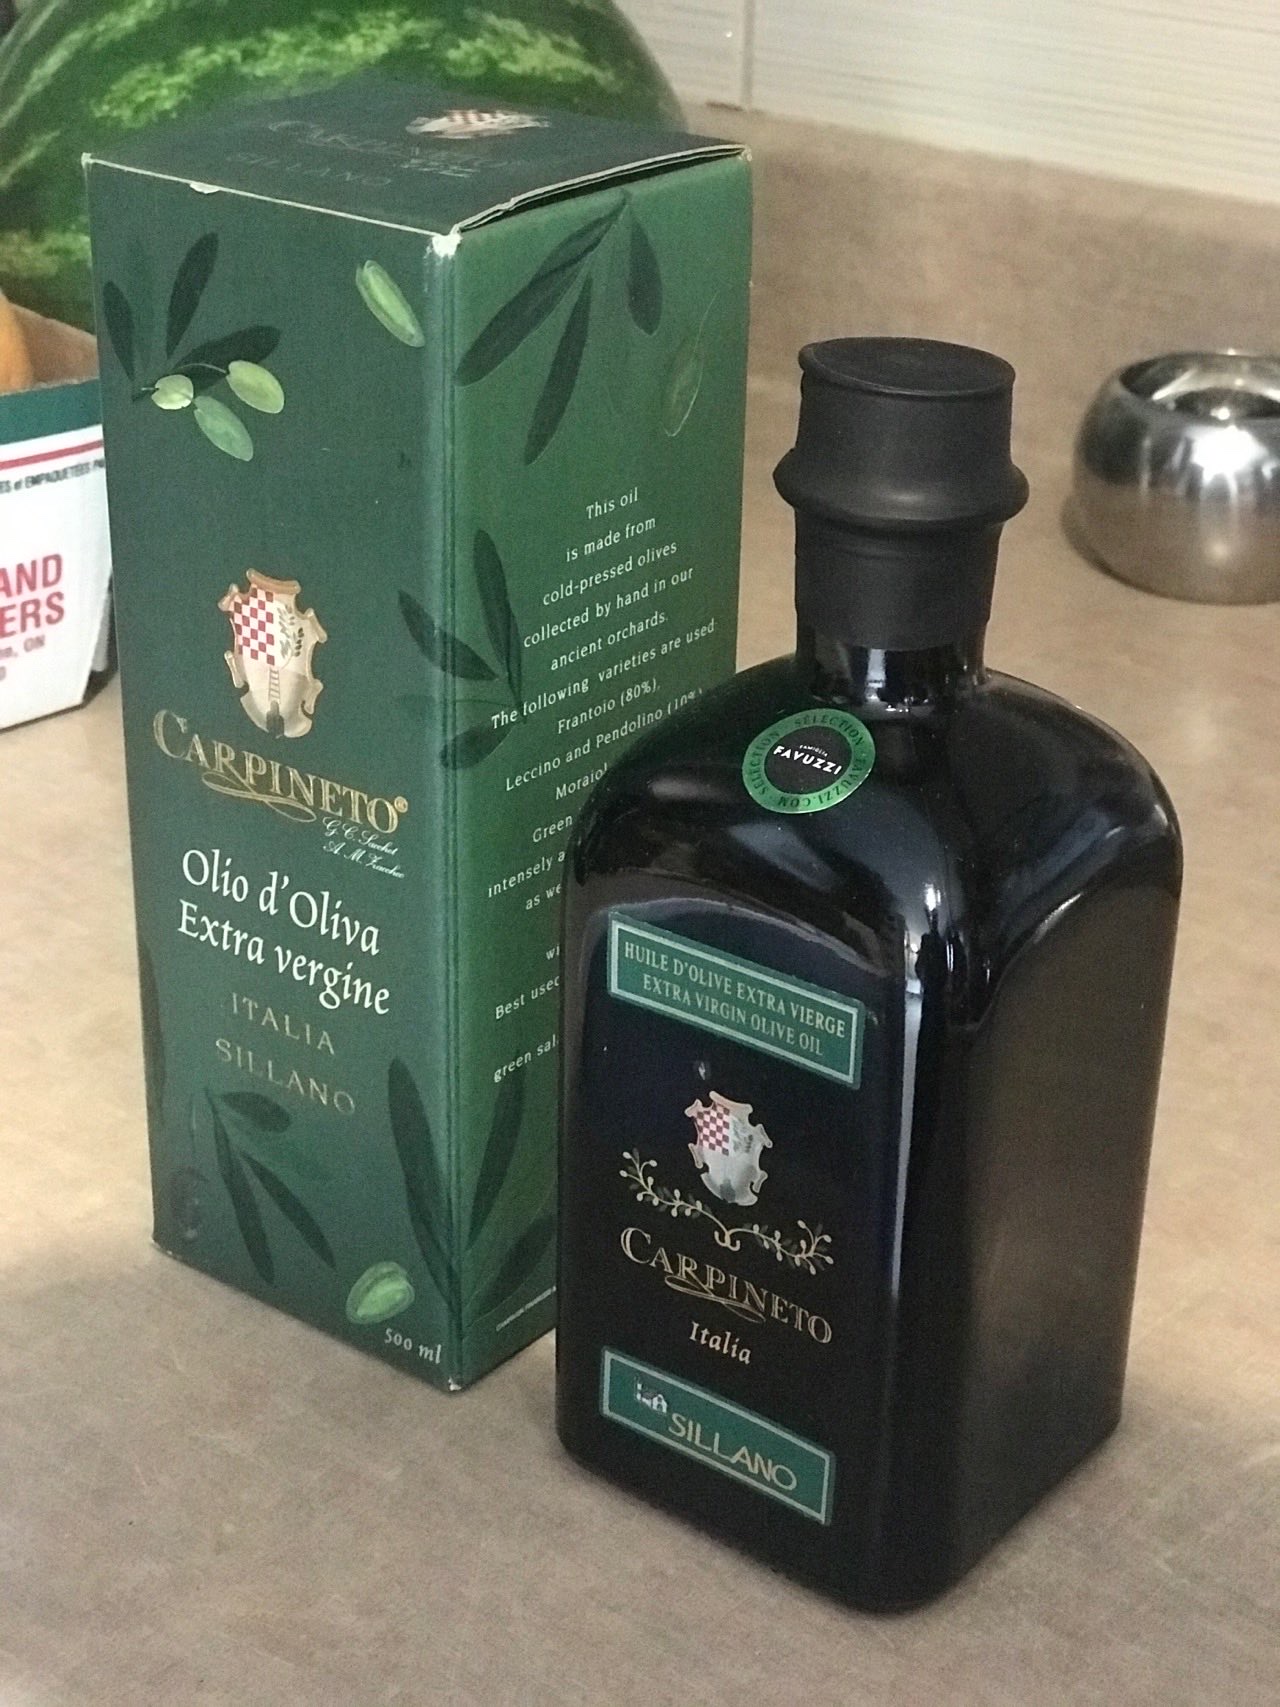 Carpineto Olive Oil – Olio d’Oliva Extra vergine. A Must Try!